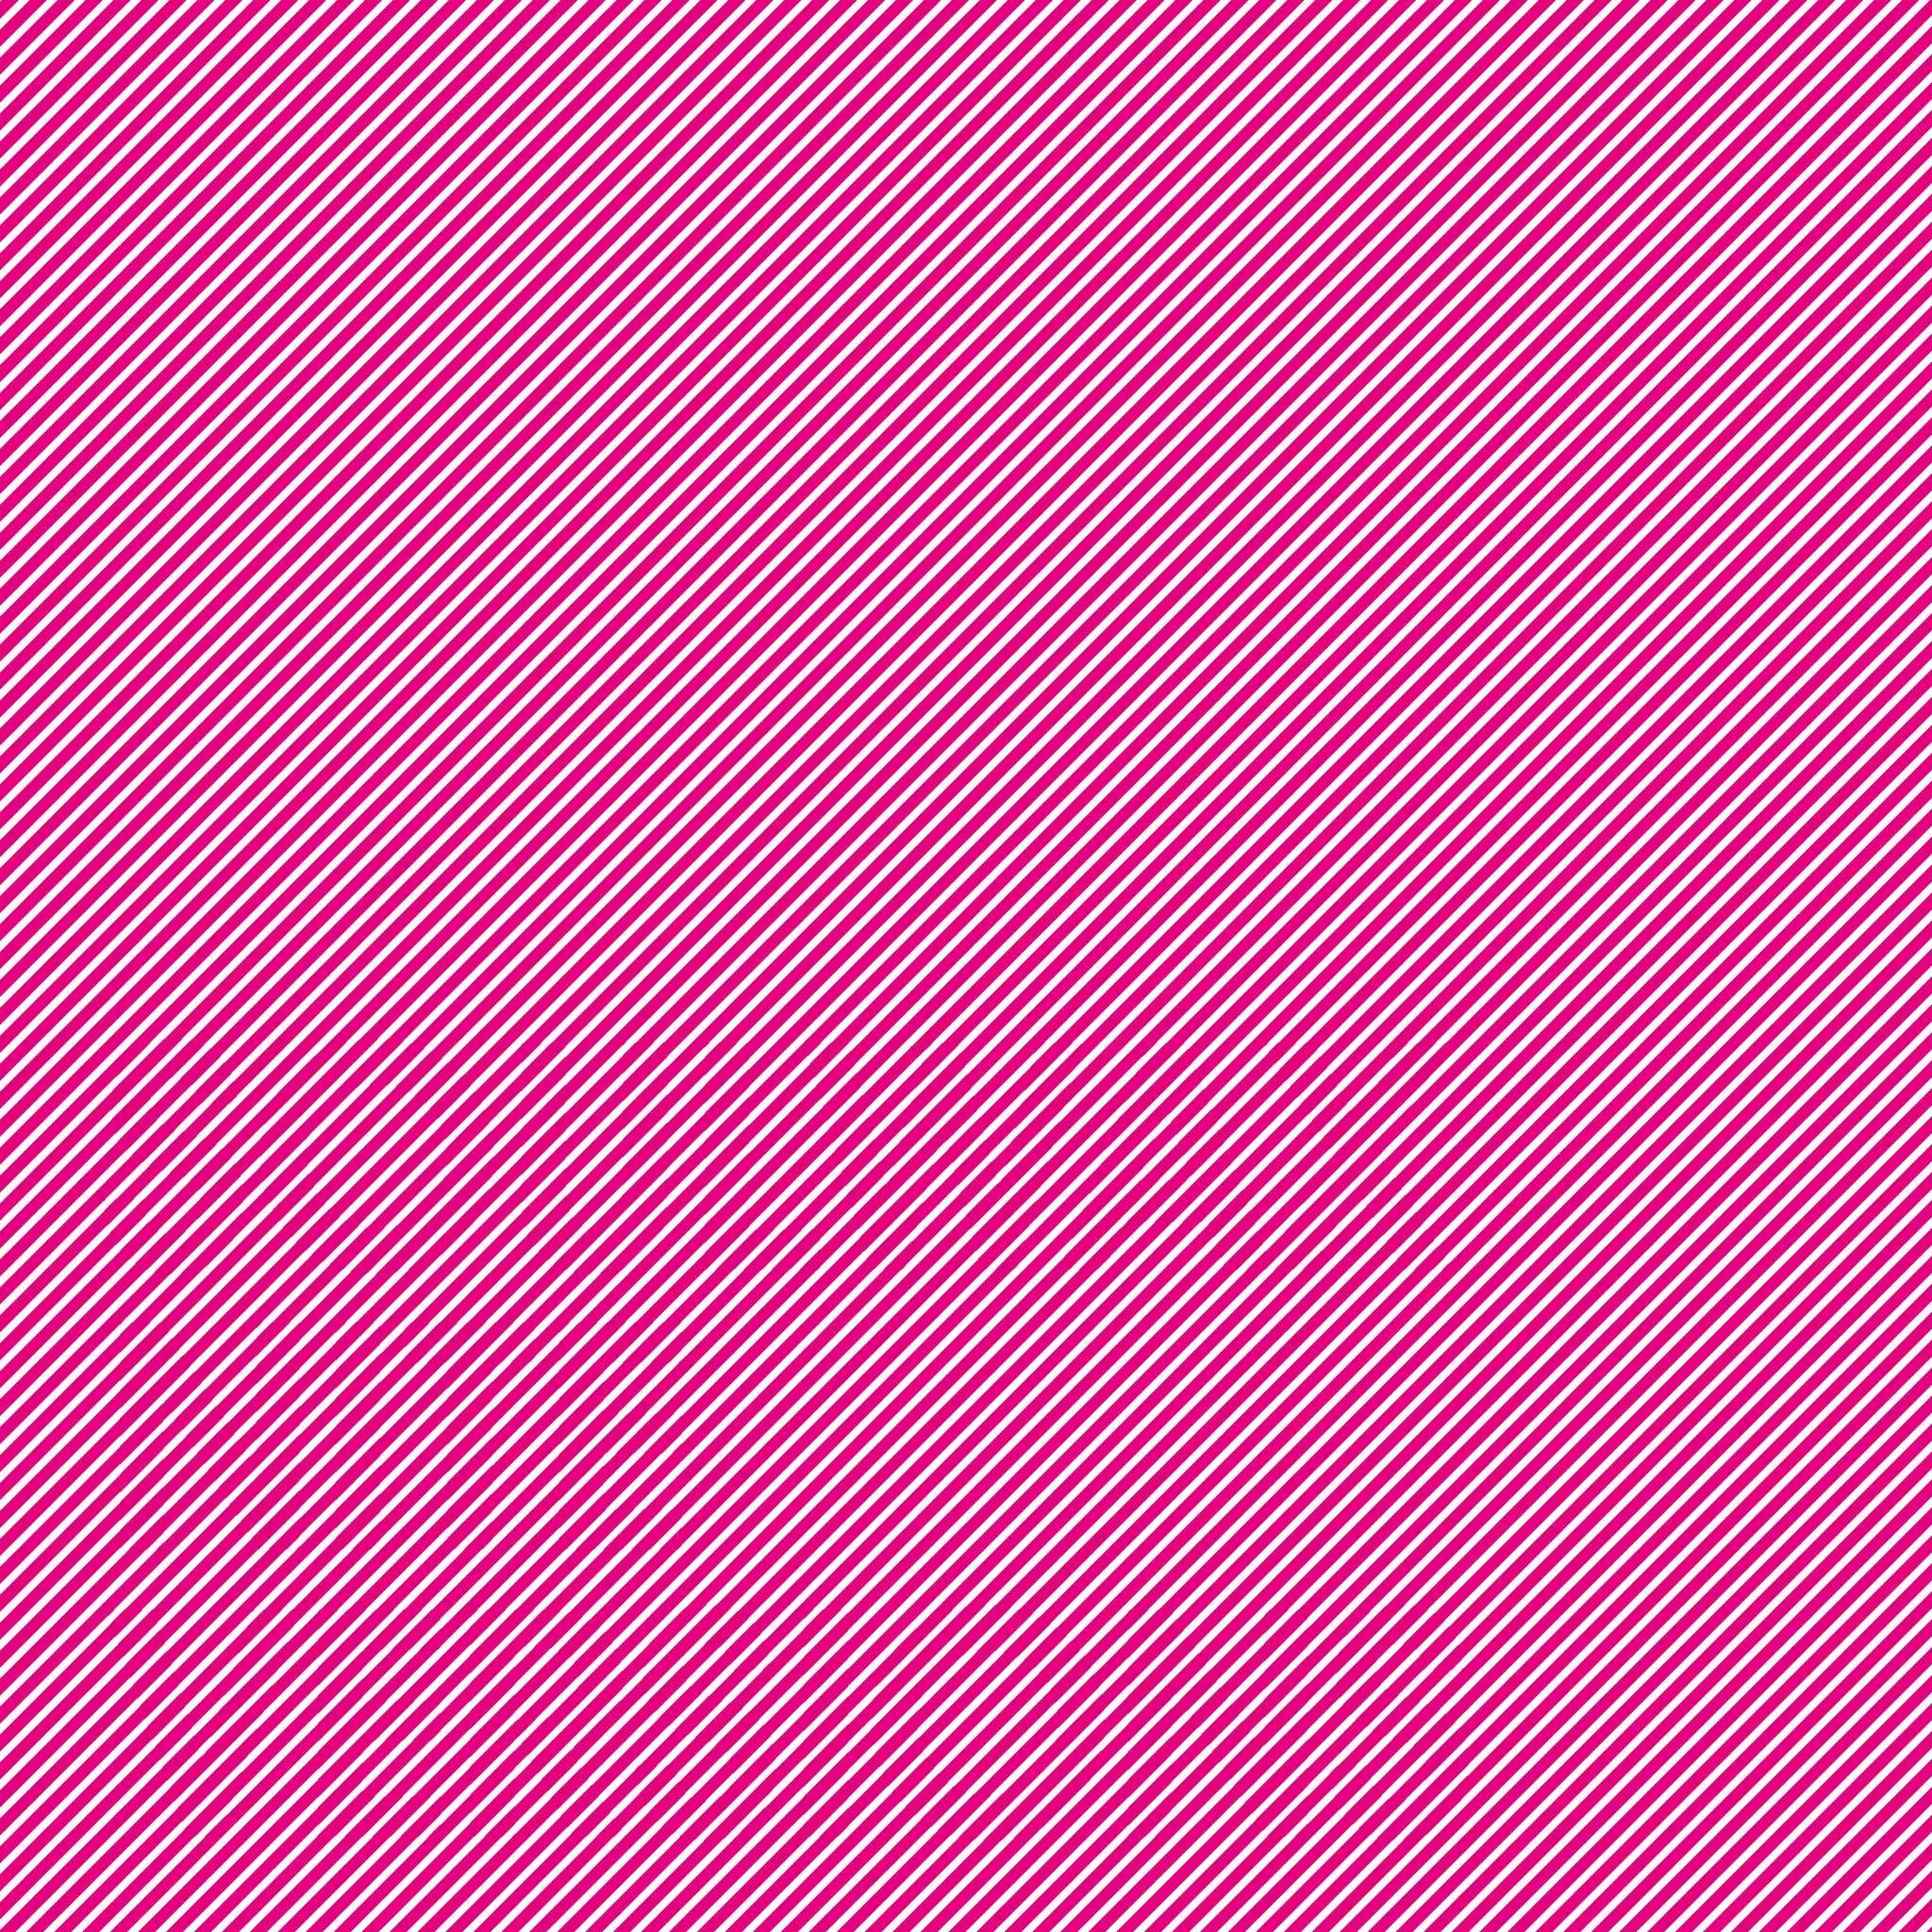 <strong>Soulwax - Nite Versions</strong> (Vinyl LP - black)